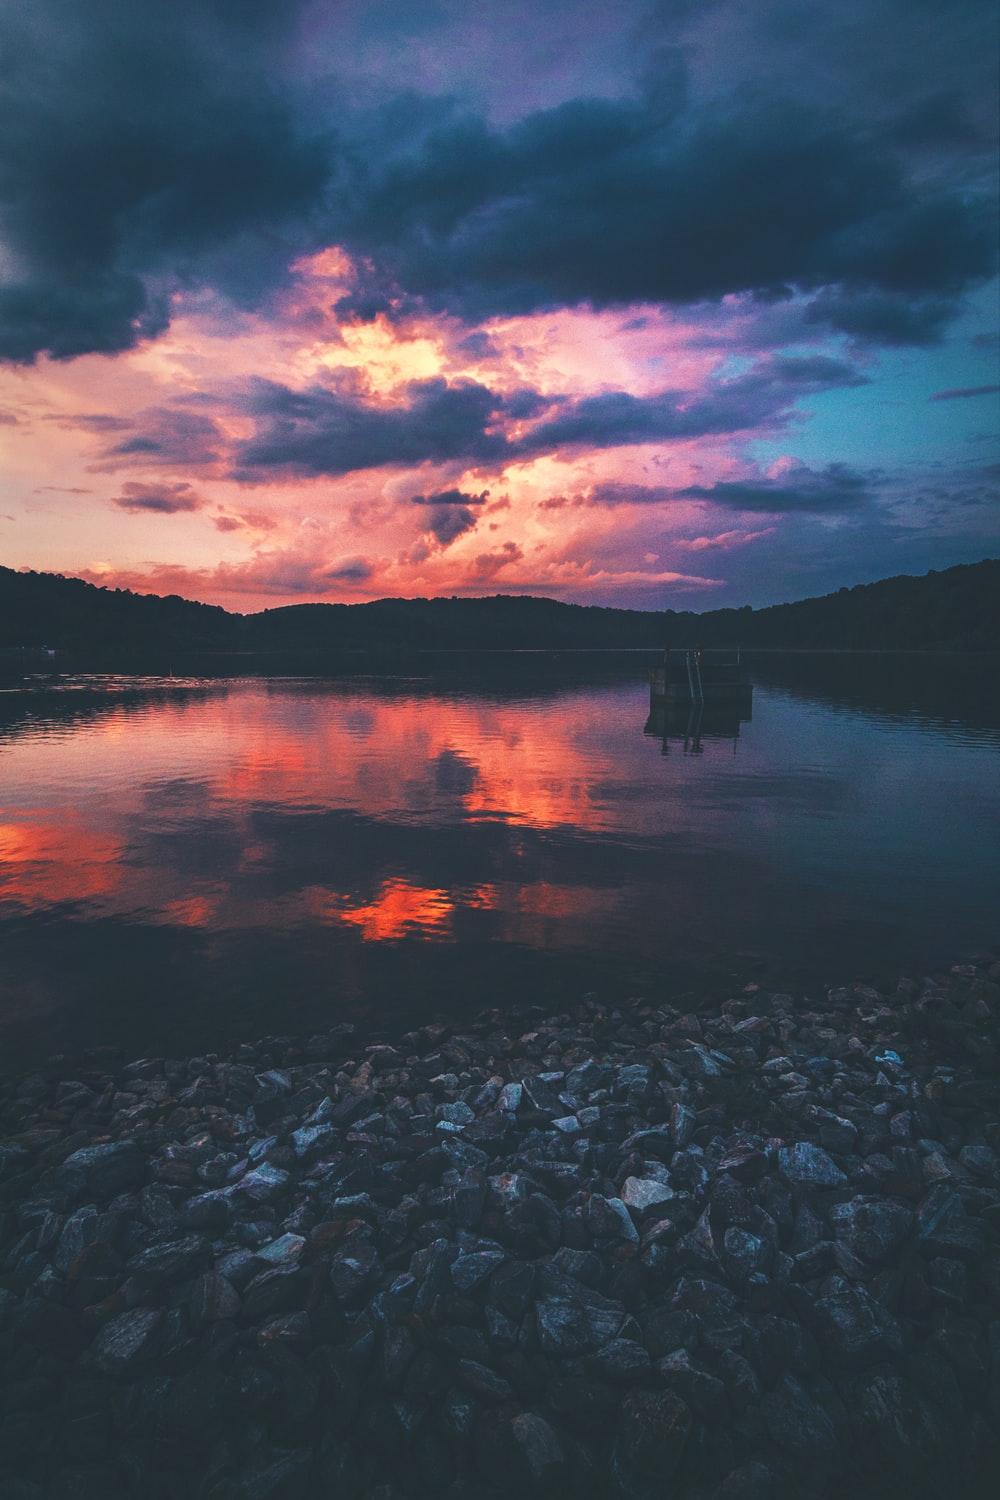 Lake Sunset Picture. Download Free Image